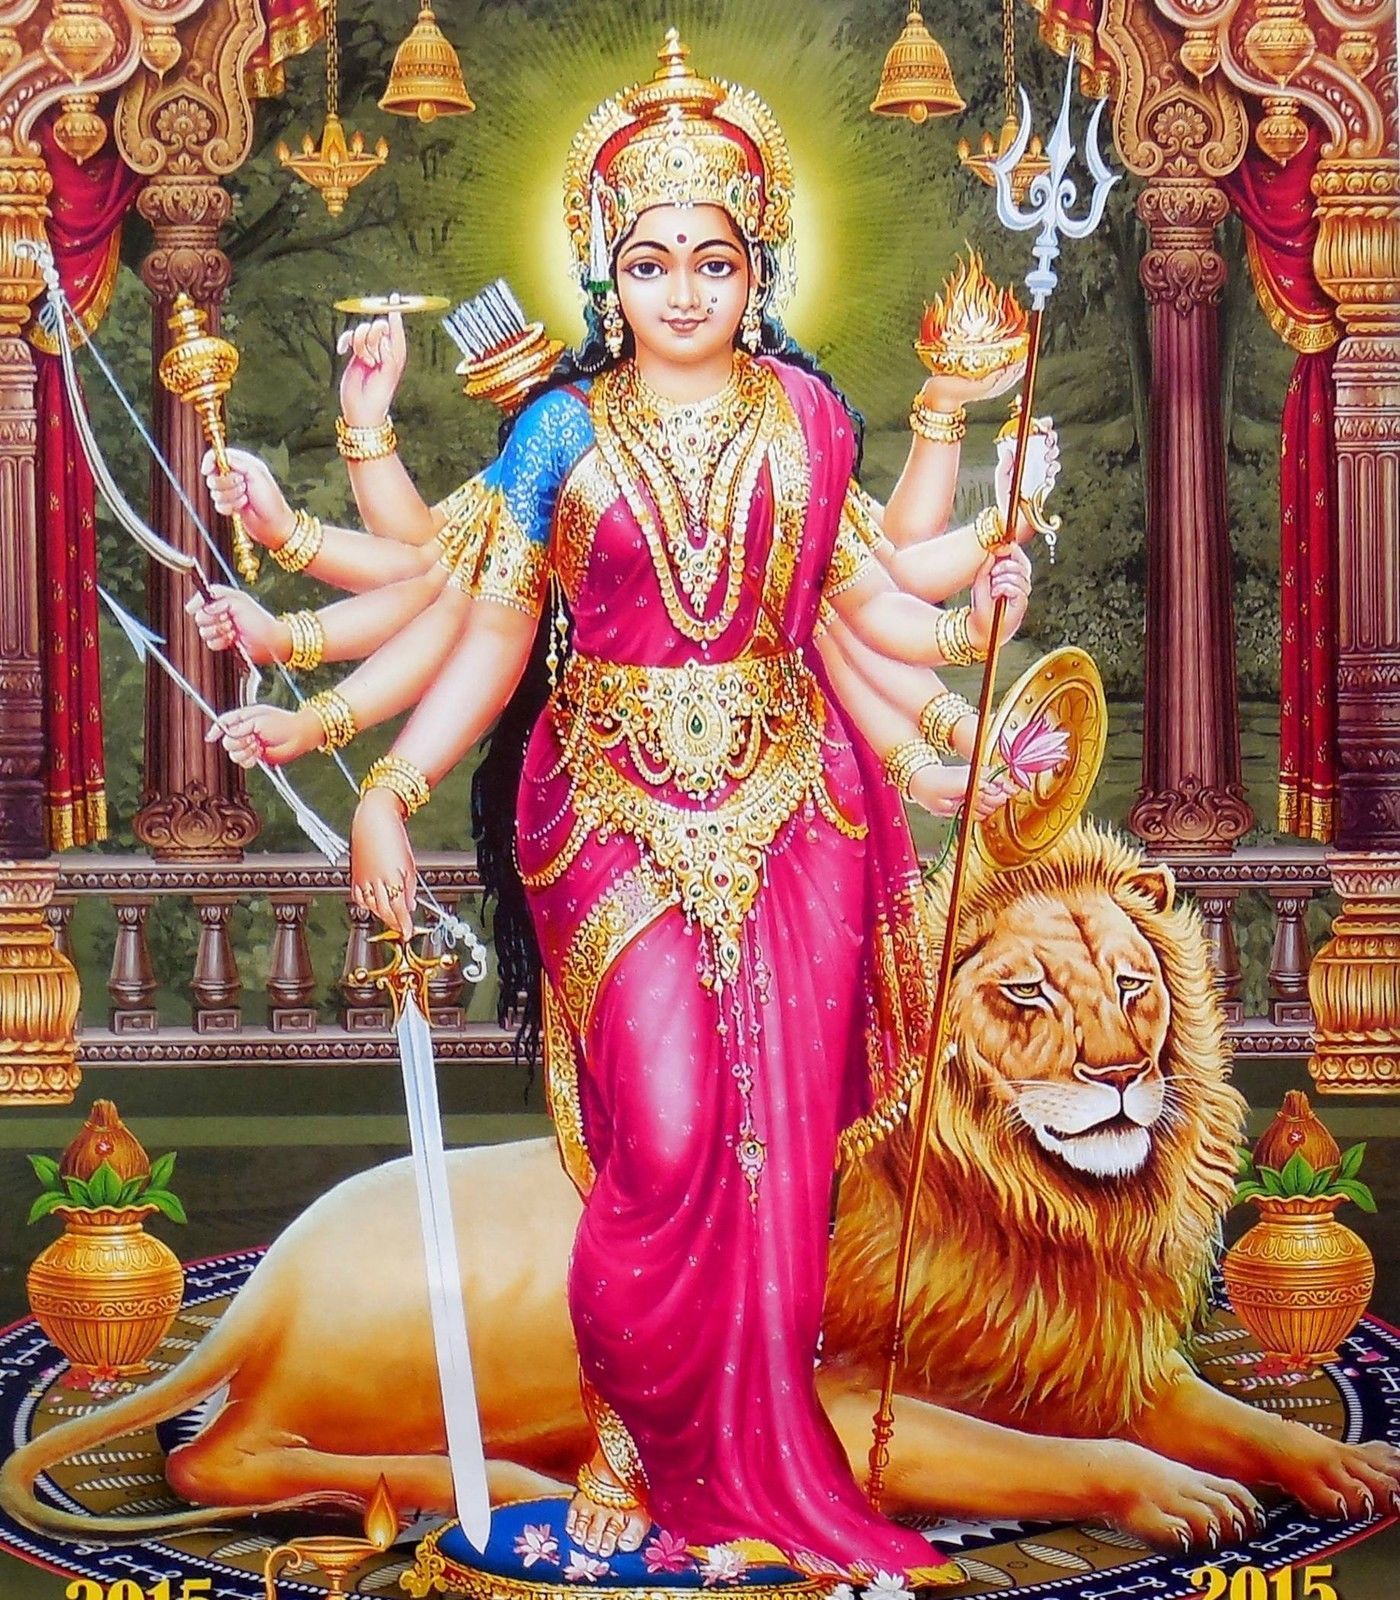 Who gave birth to Durga, Mahakali or Saraswati? - Quora